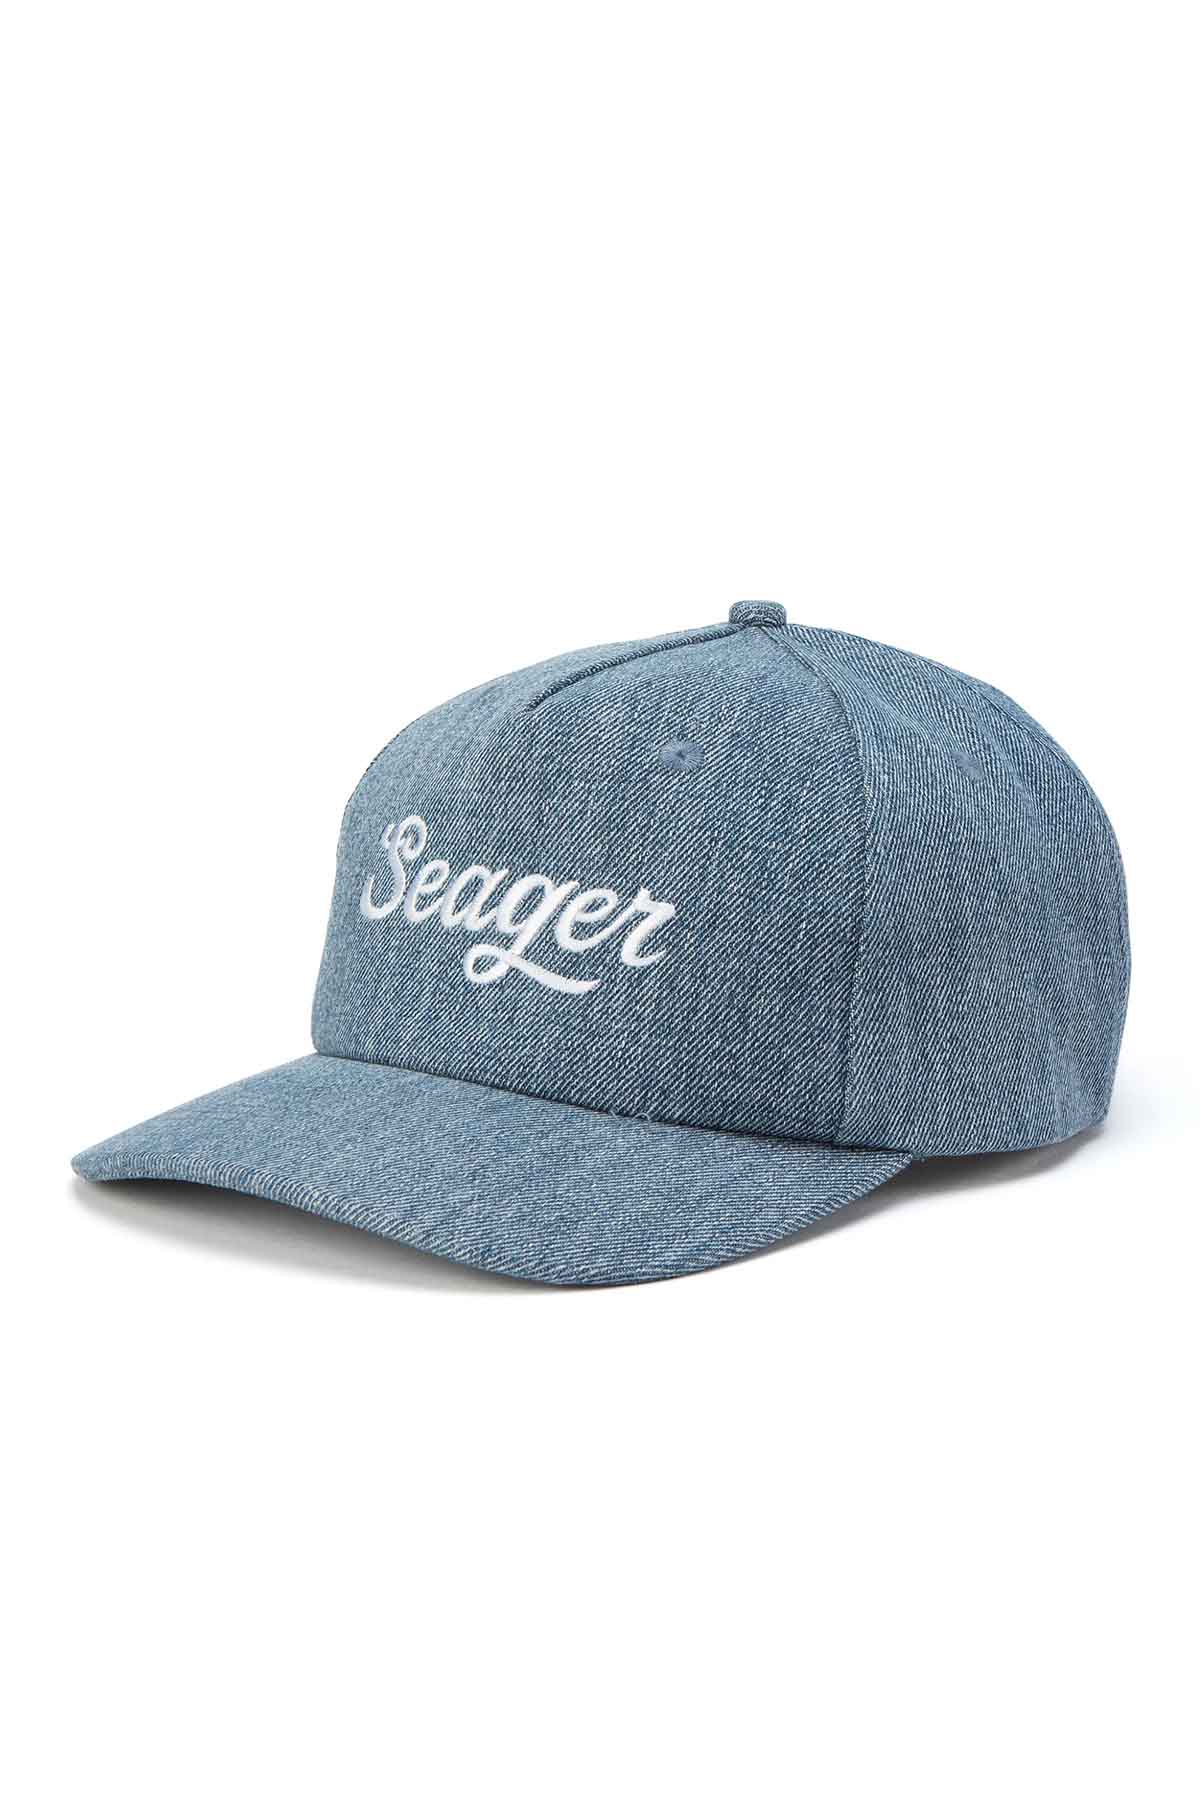 Seager - Big Denim Snapback - Indigo - Profile